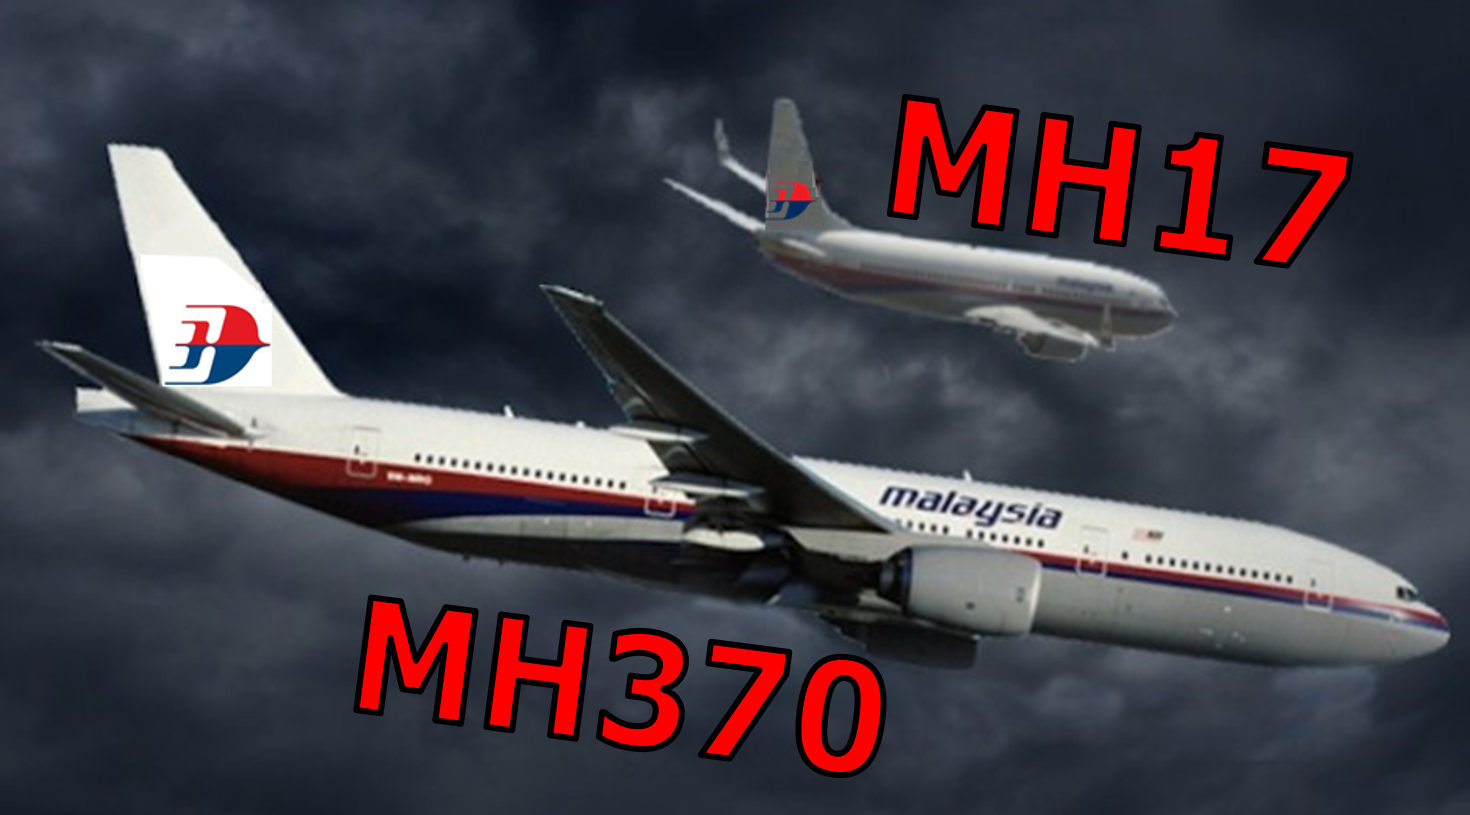 The MH17 MH370 Swap